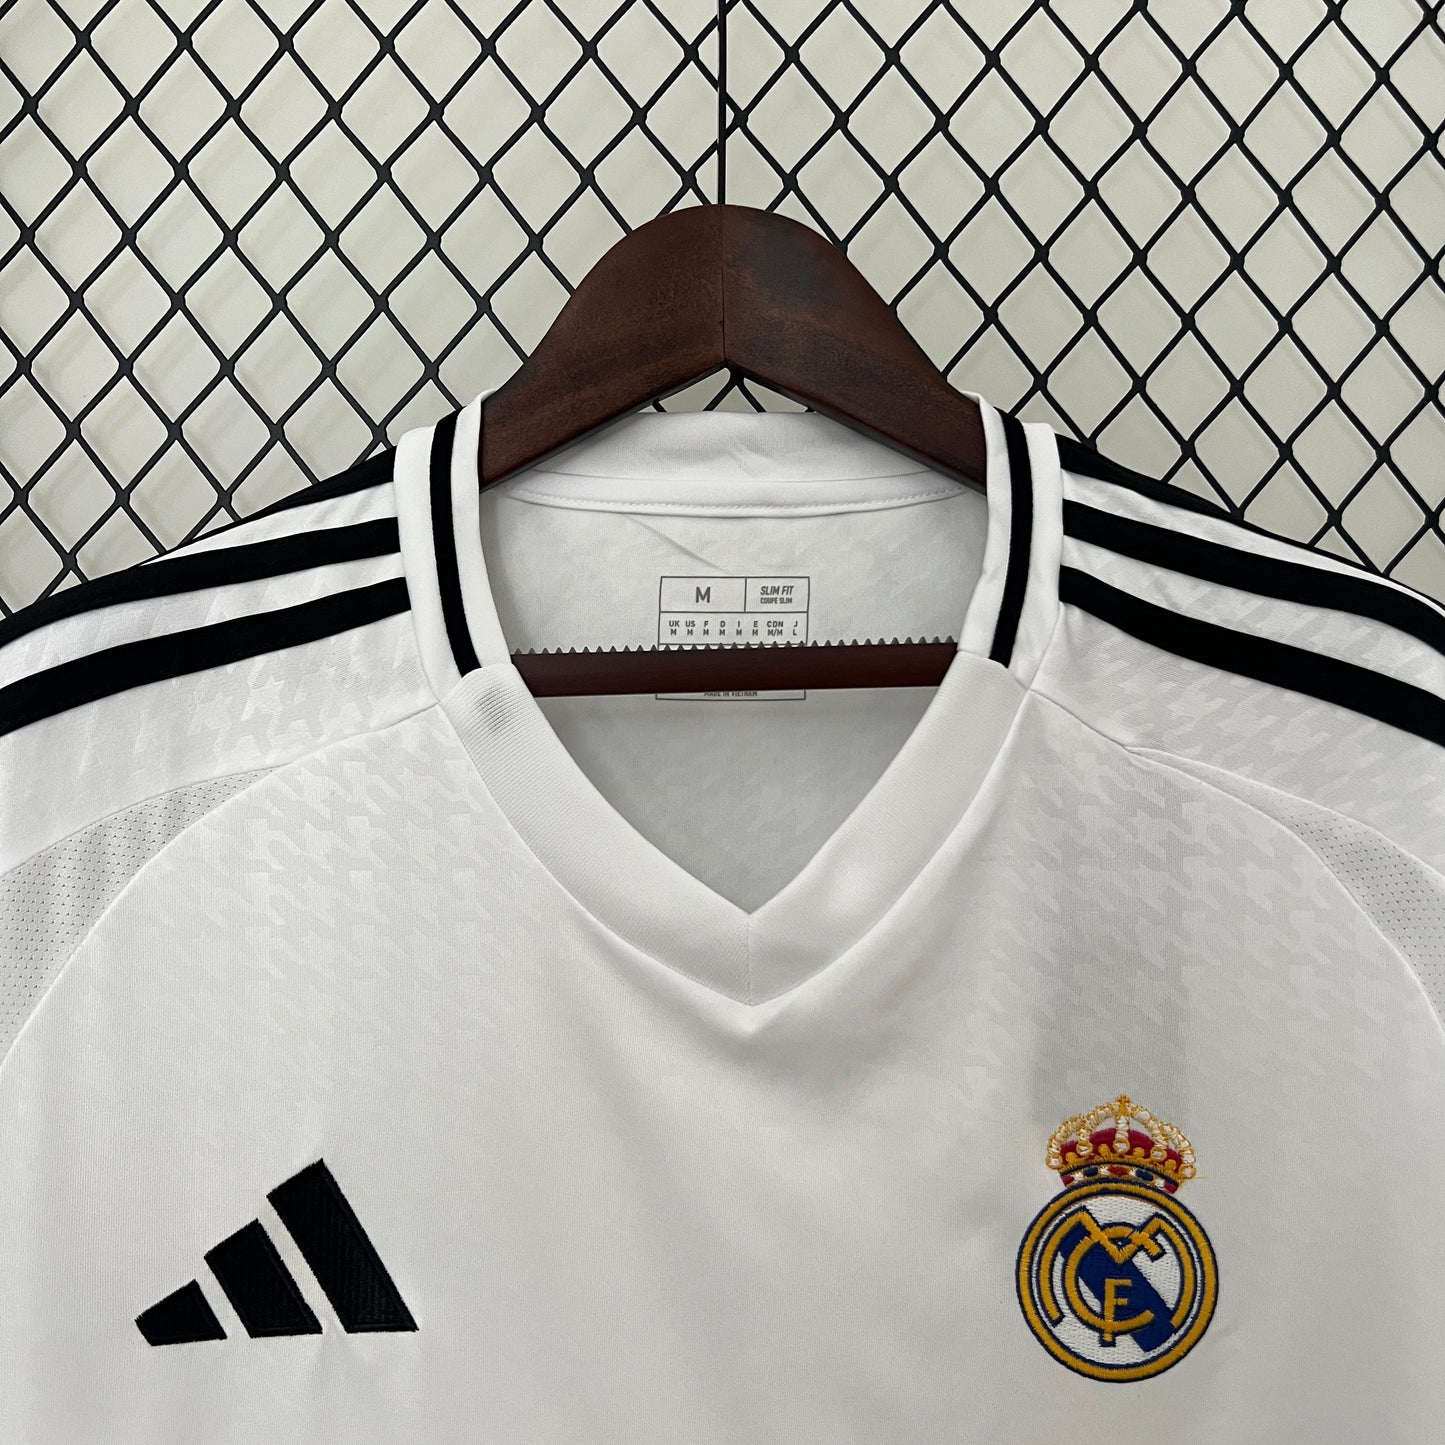 24/25 Real Madrid Home Kit